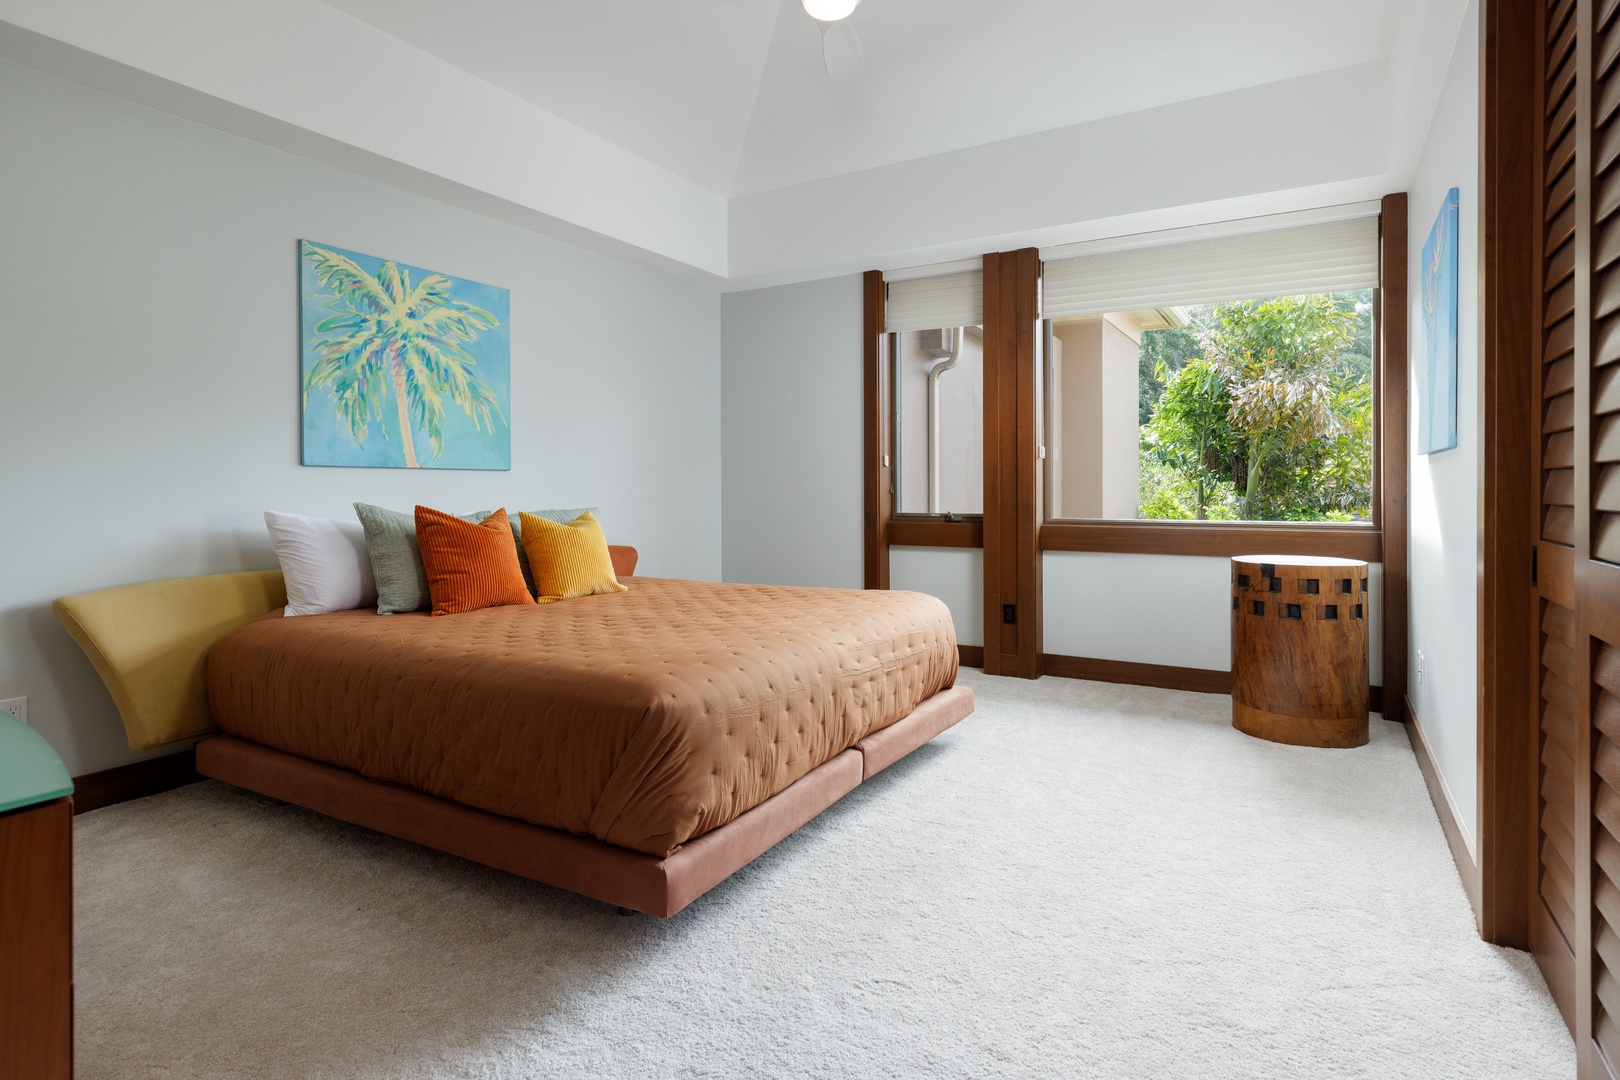 Kailua Kona Vacation Rentals, 3BD Fairways Villa (104A) at Four Seasons Resort at Hualalai - The third guest bedroom with King bed and ensuite.